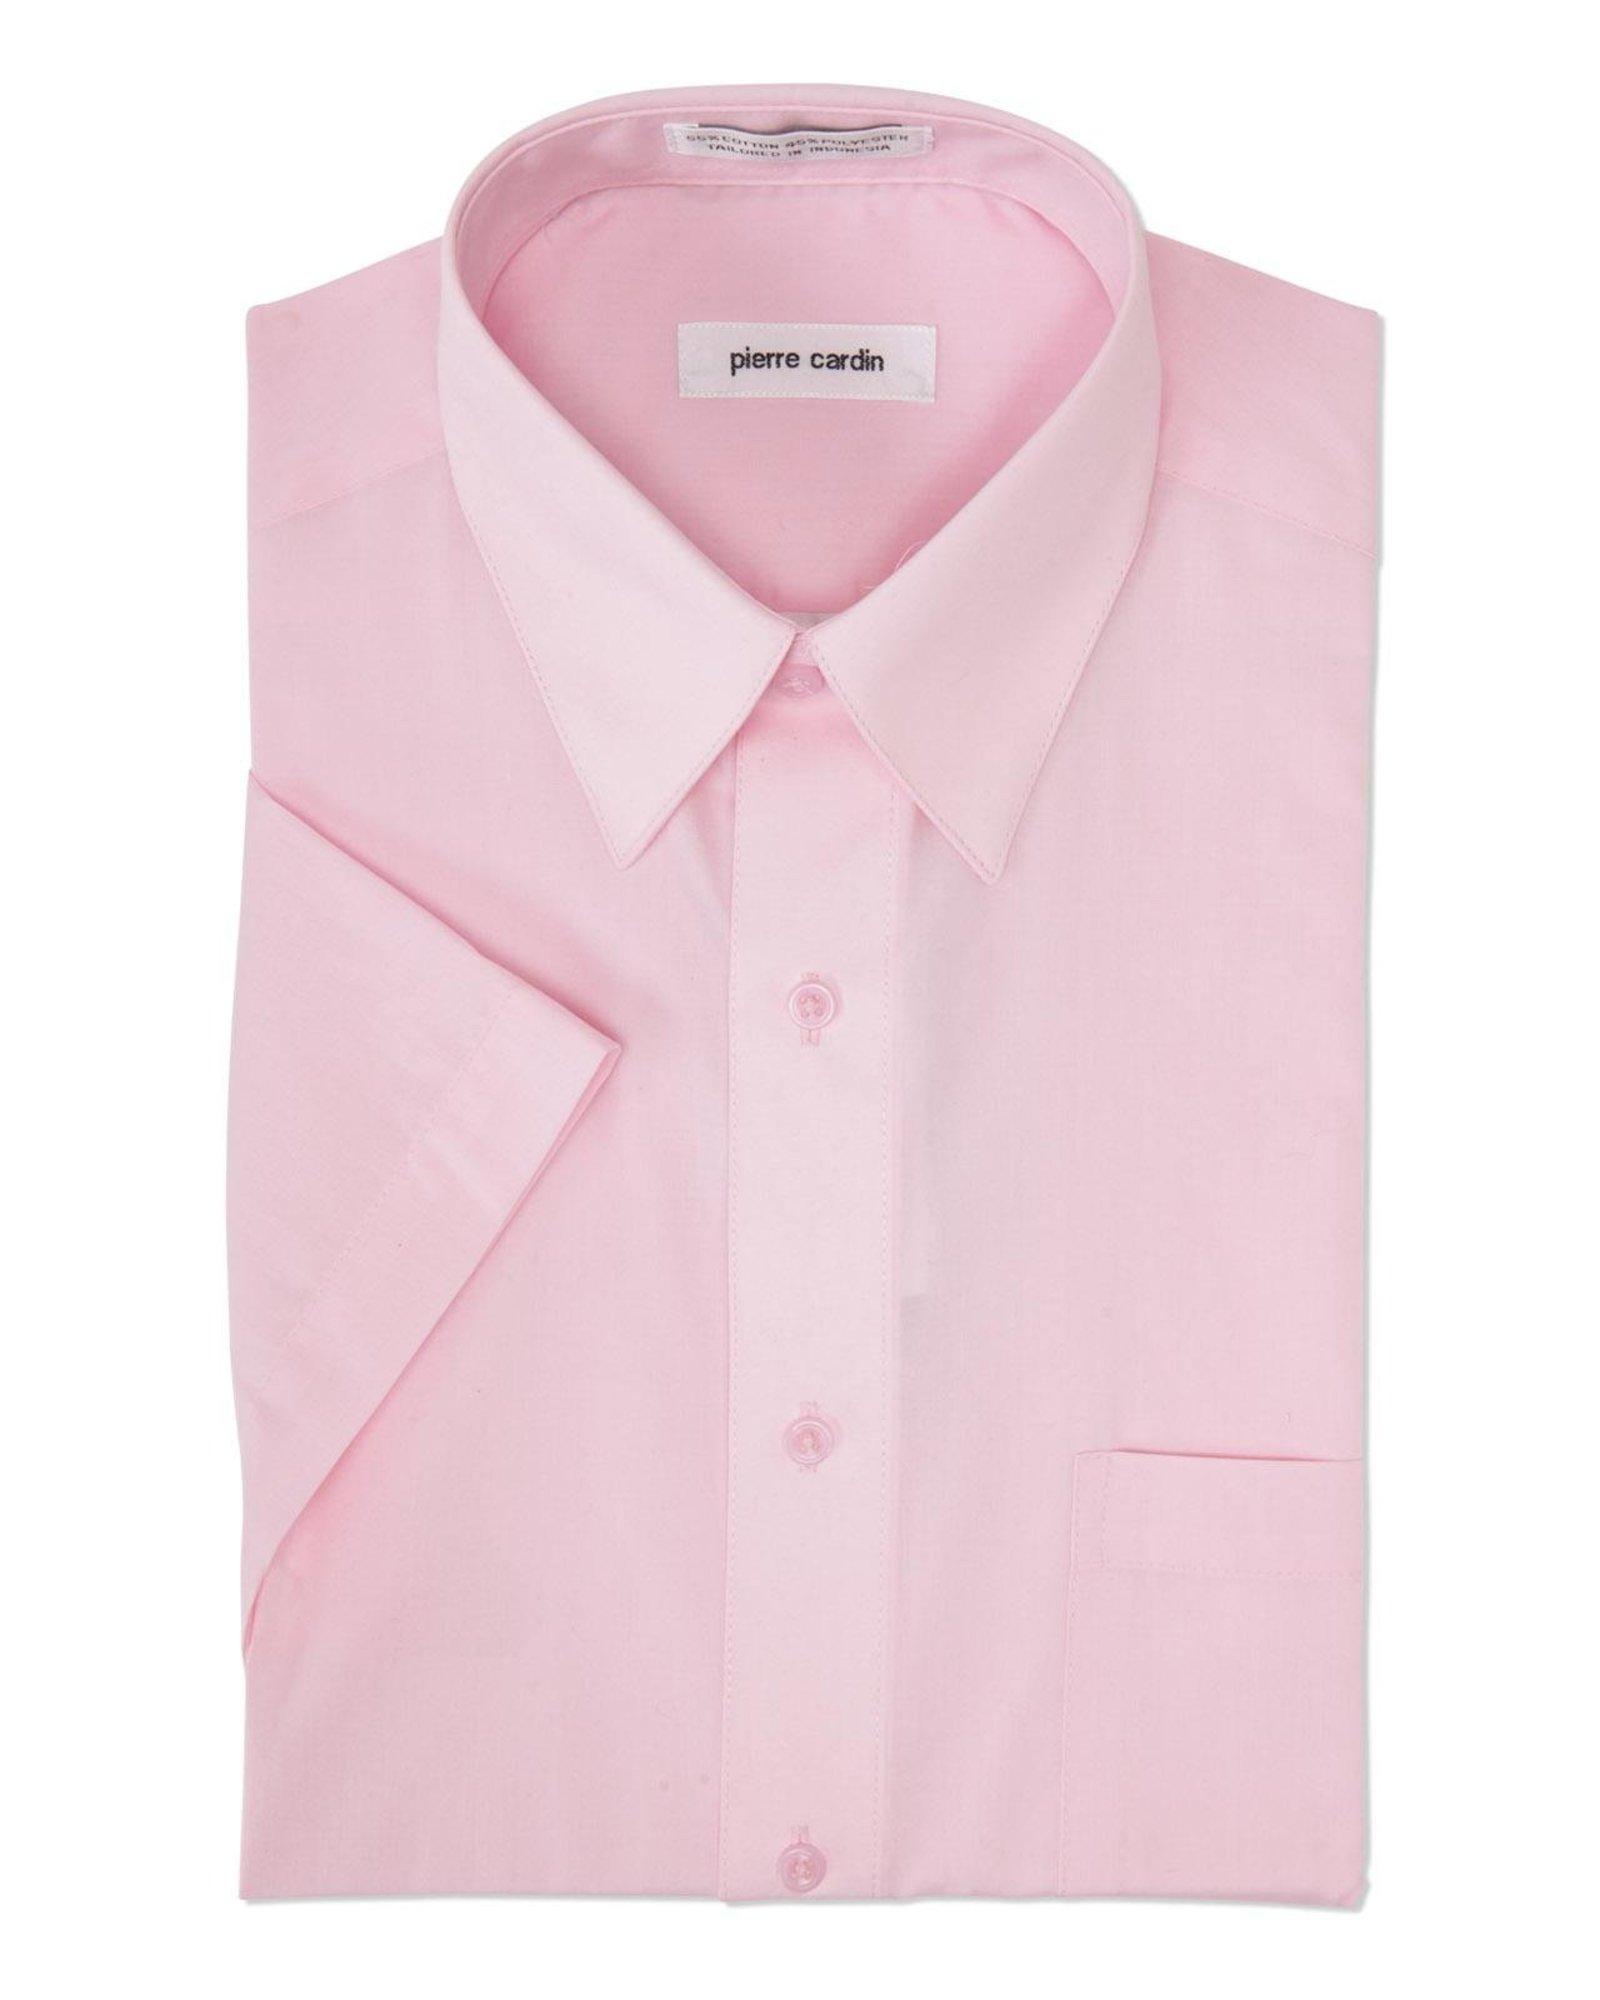 Pierre cardin Pink Short Sleeve Dress Shirt in Pink for Men | Lyst